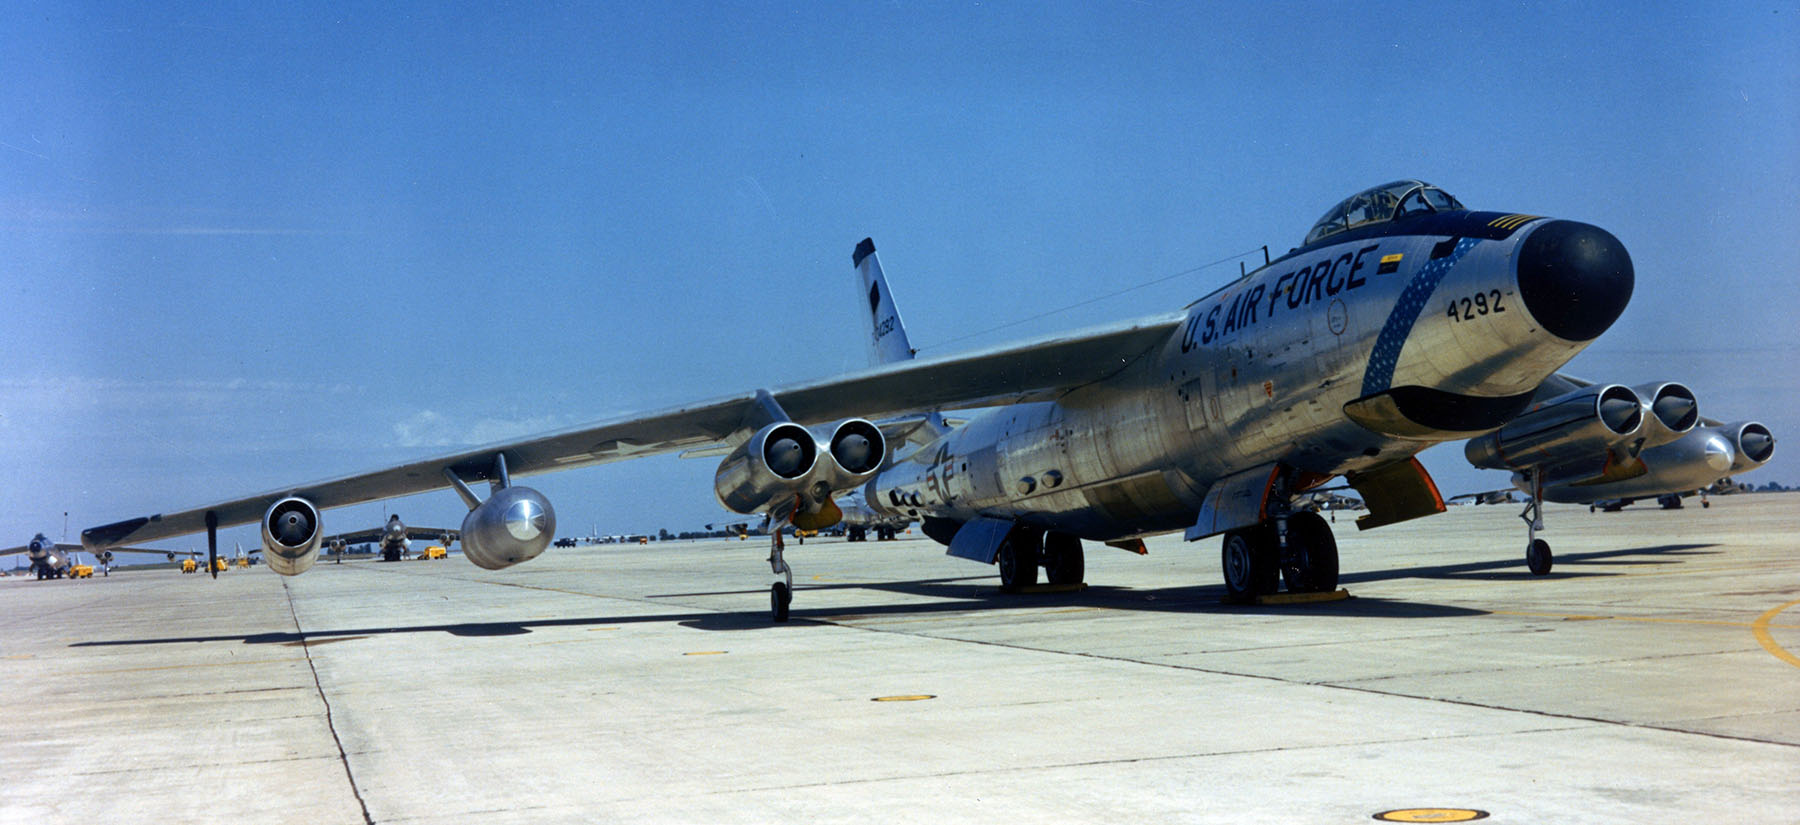 Boeing RB-47H Stratojets c1965.jpg